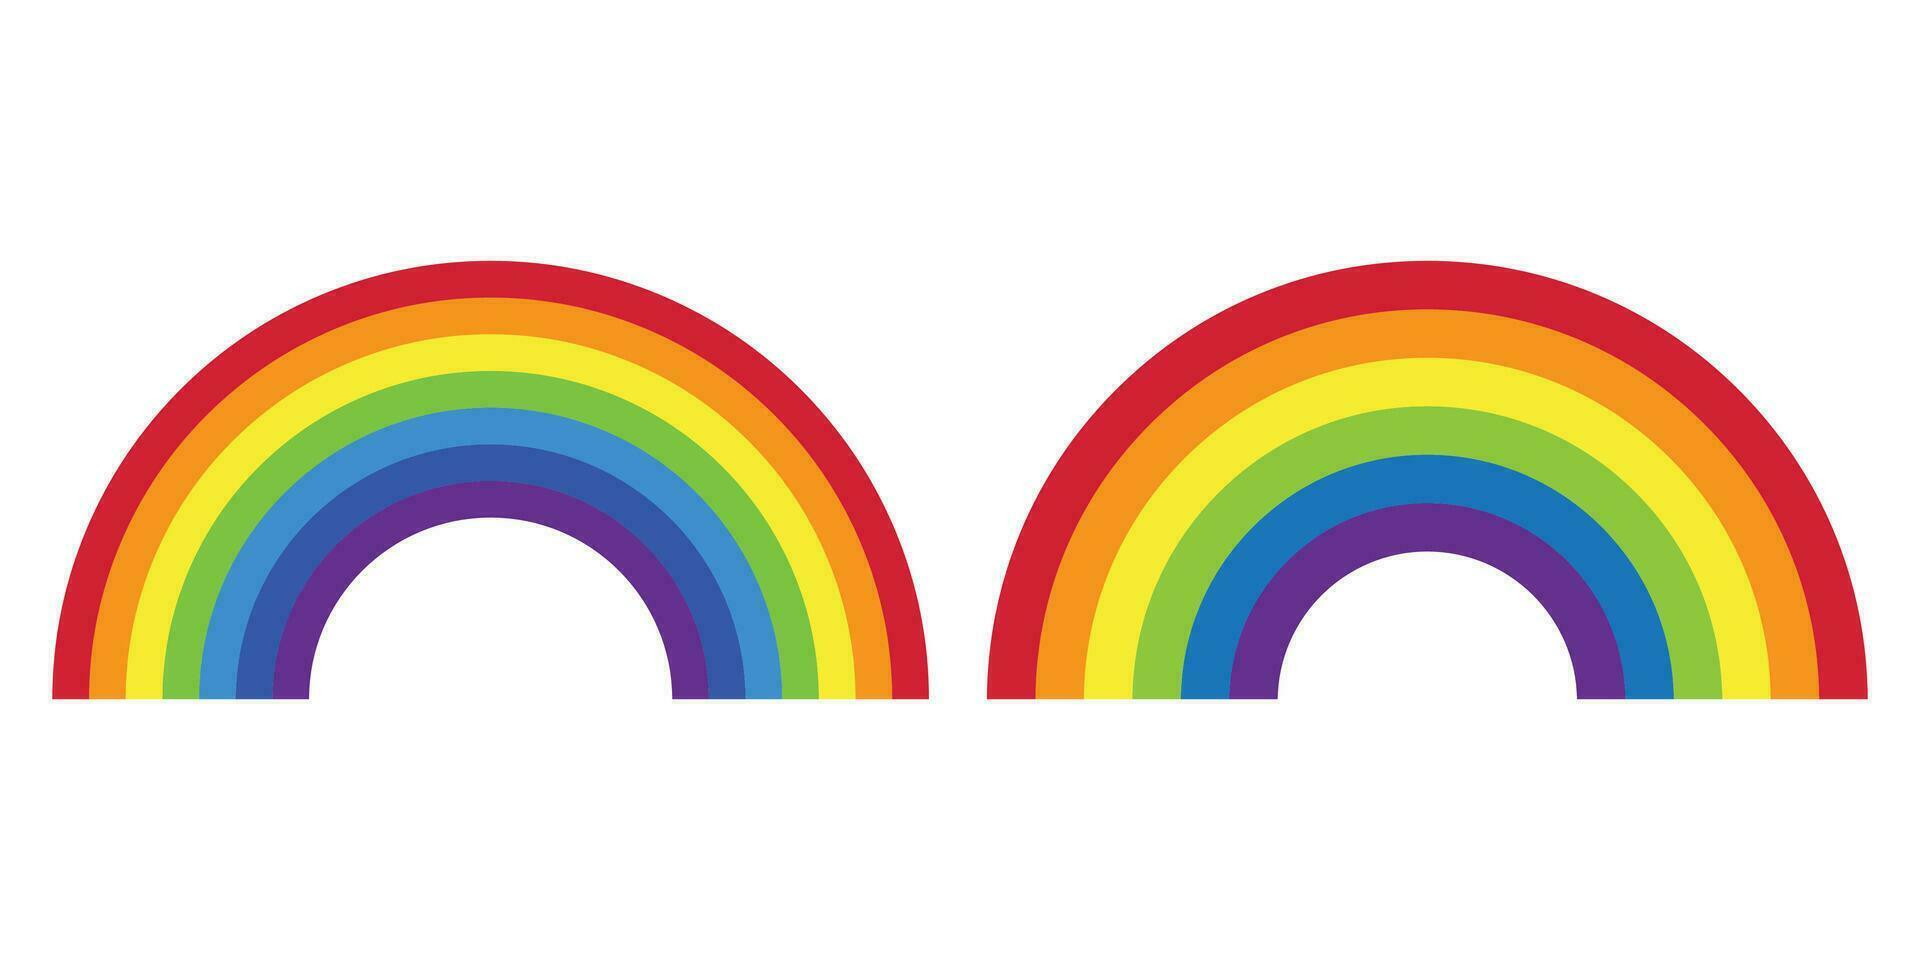 Set of Rainbow icons on white background. Vector illustration.